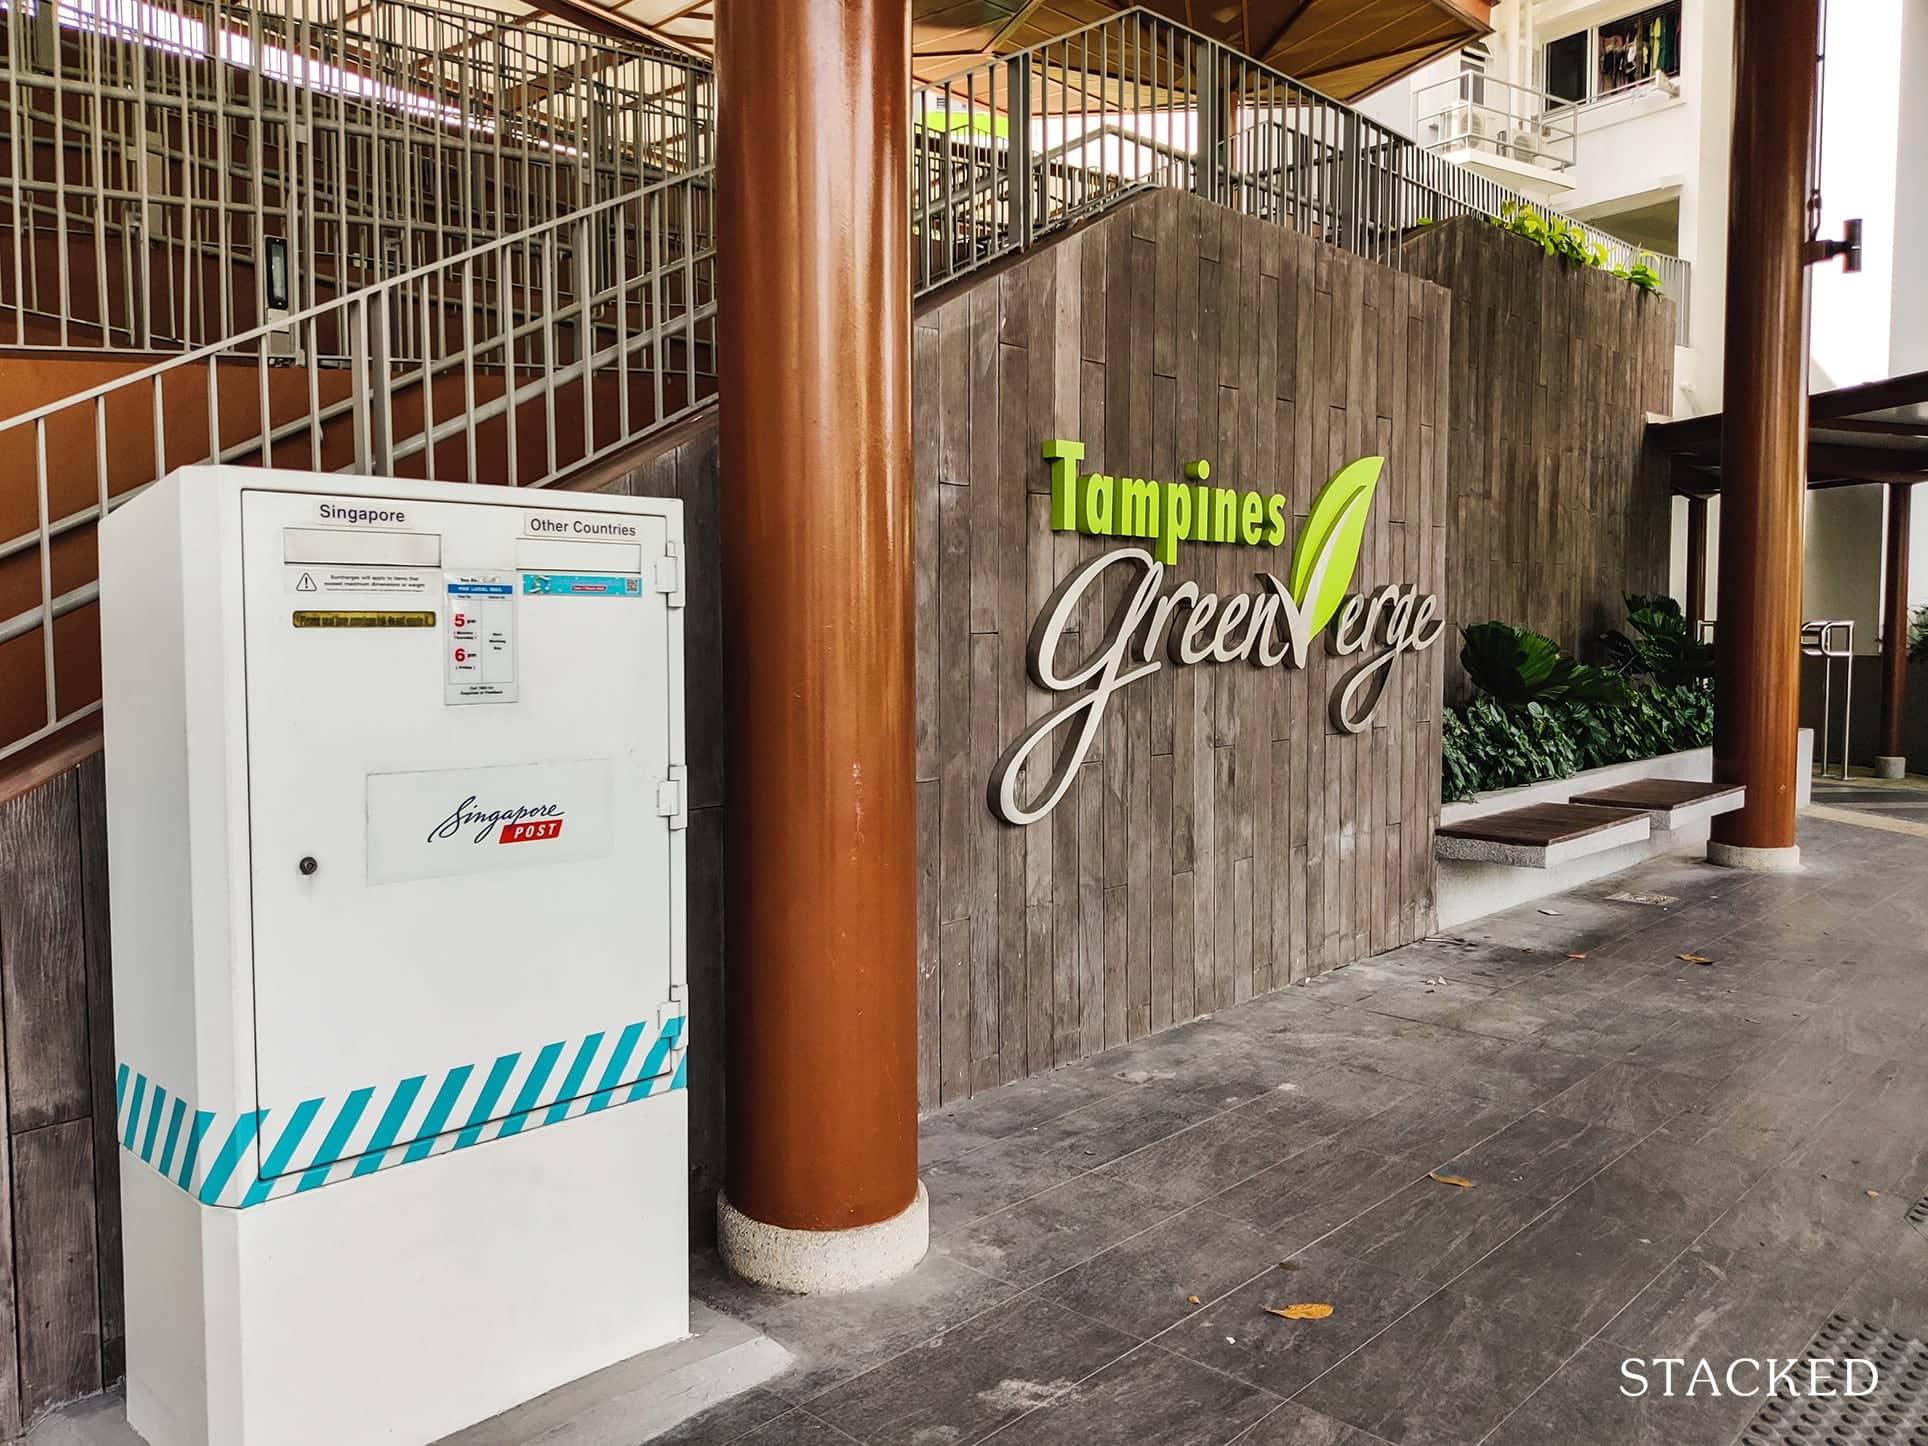 Tampines GreenVerge Singapore post